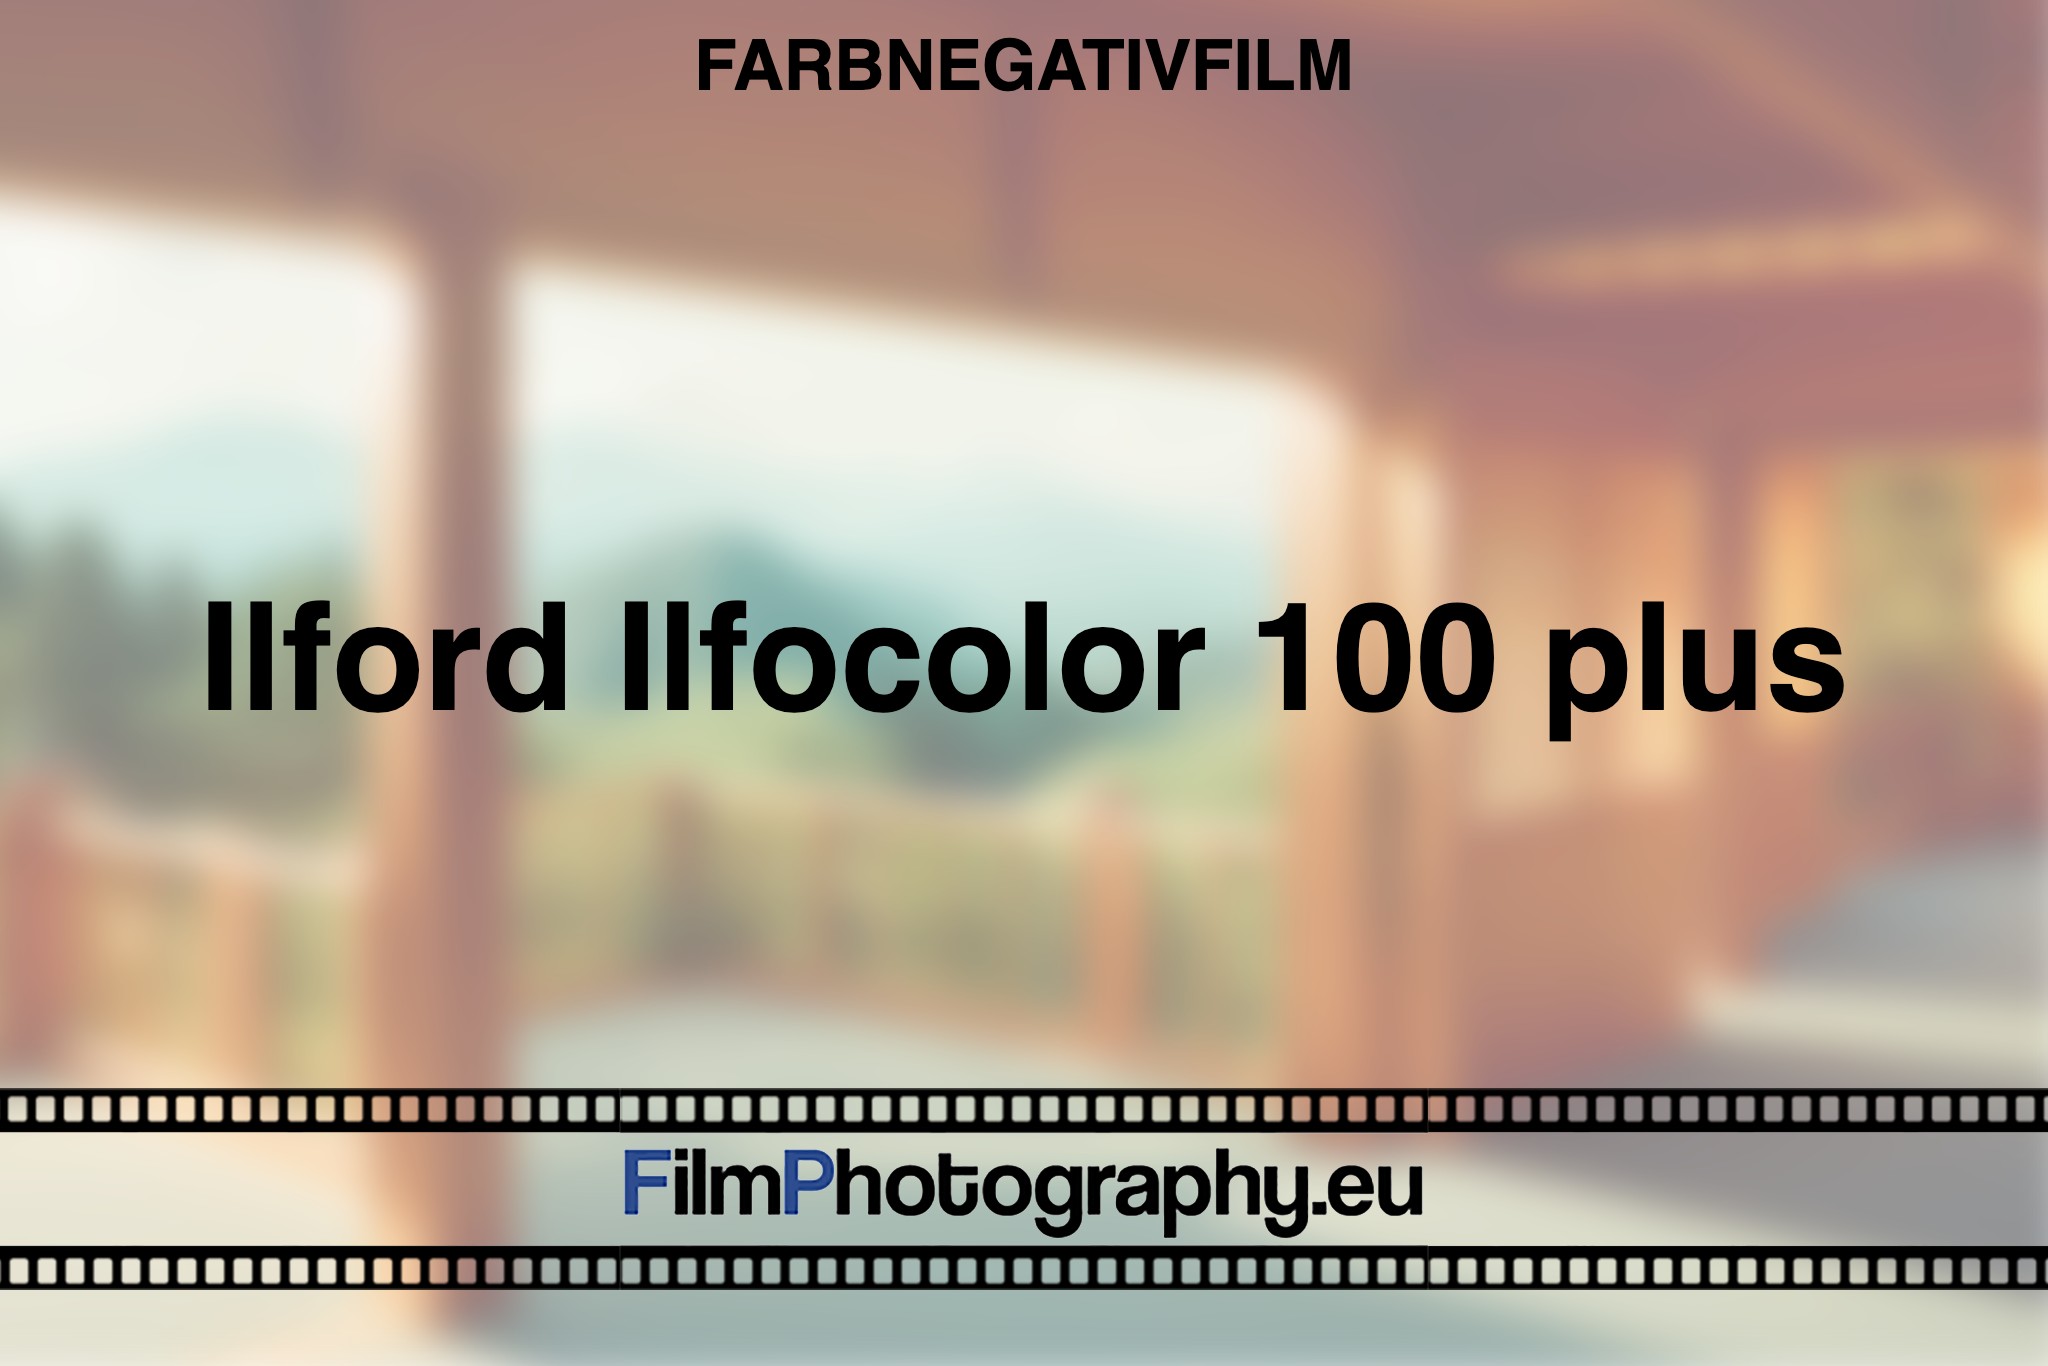 ilford-ilfocolor-100-plus-farbnegativfilm-bnv